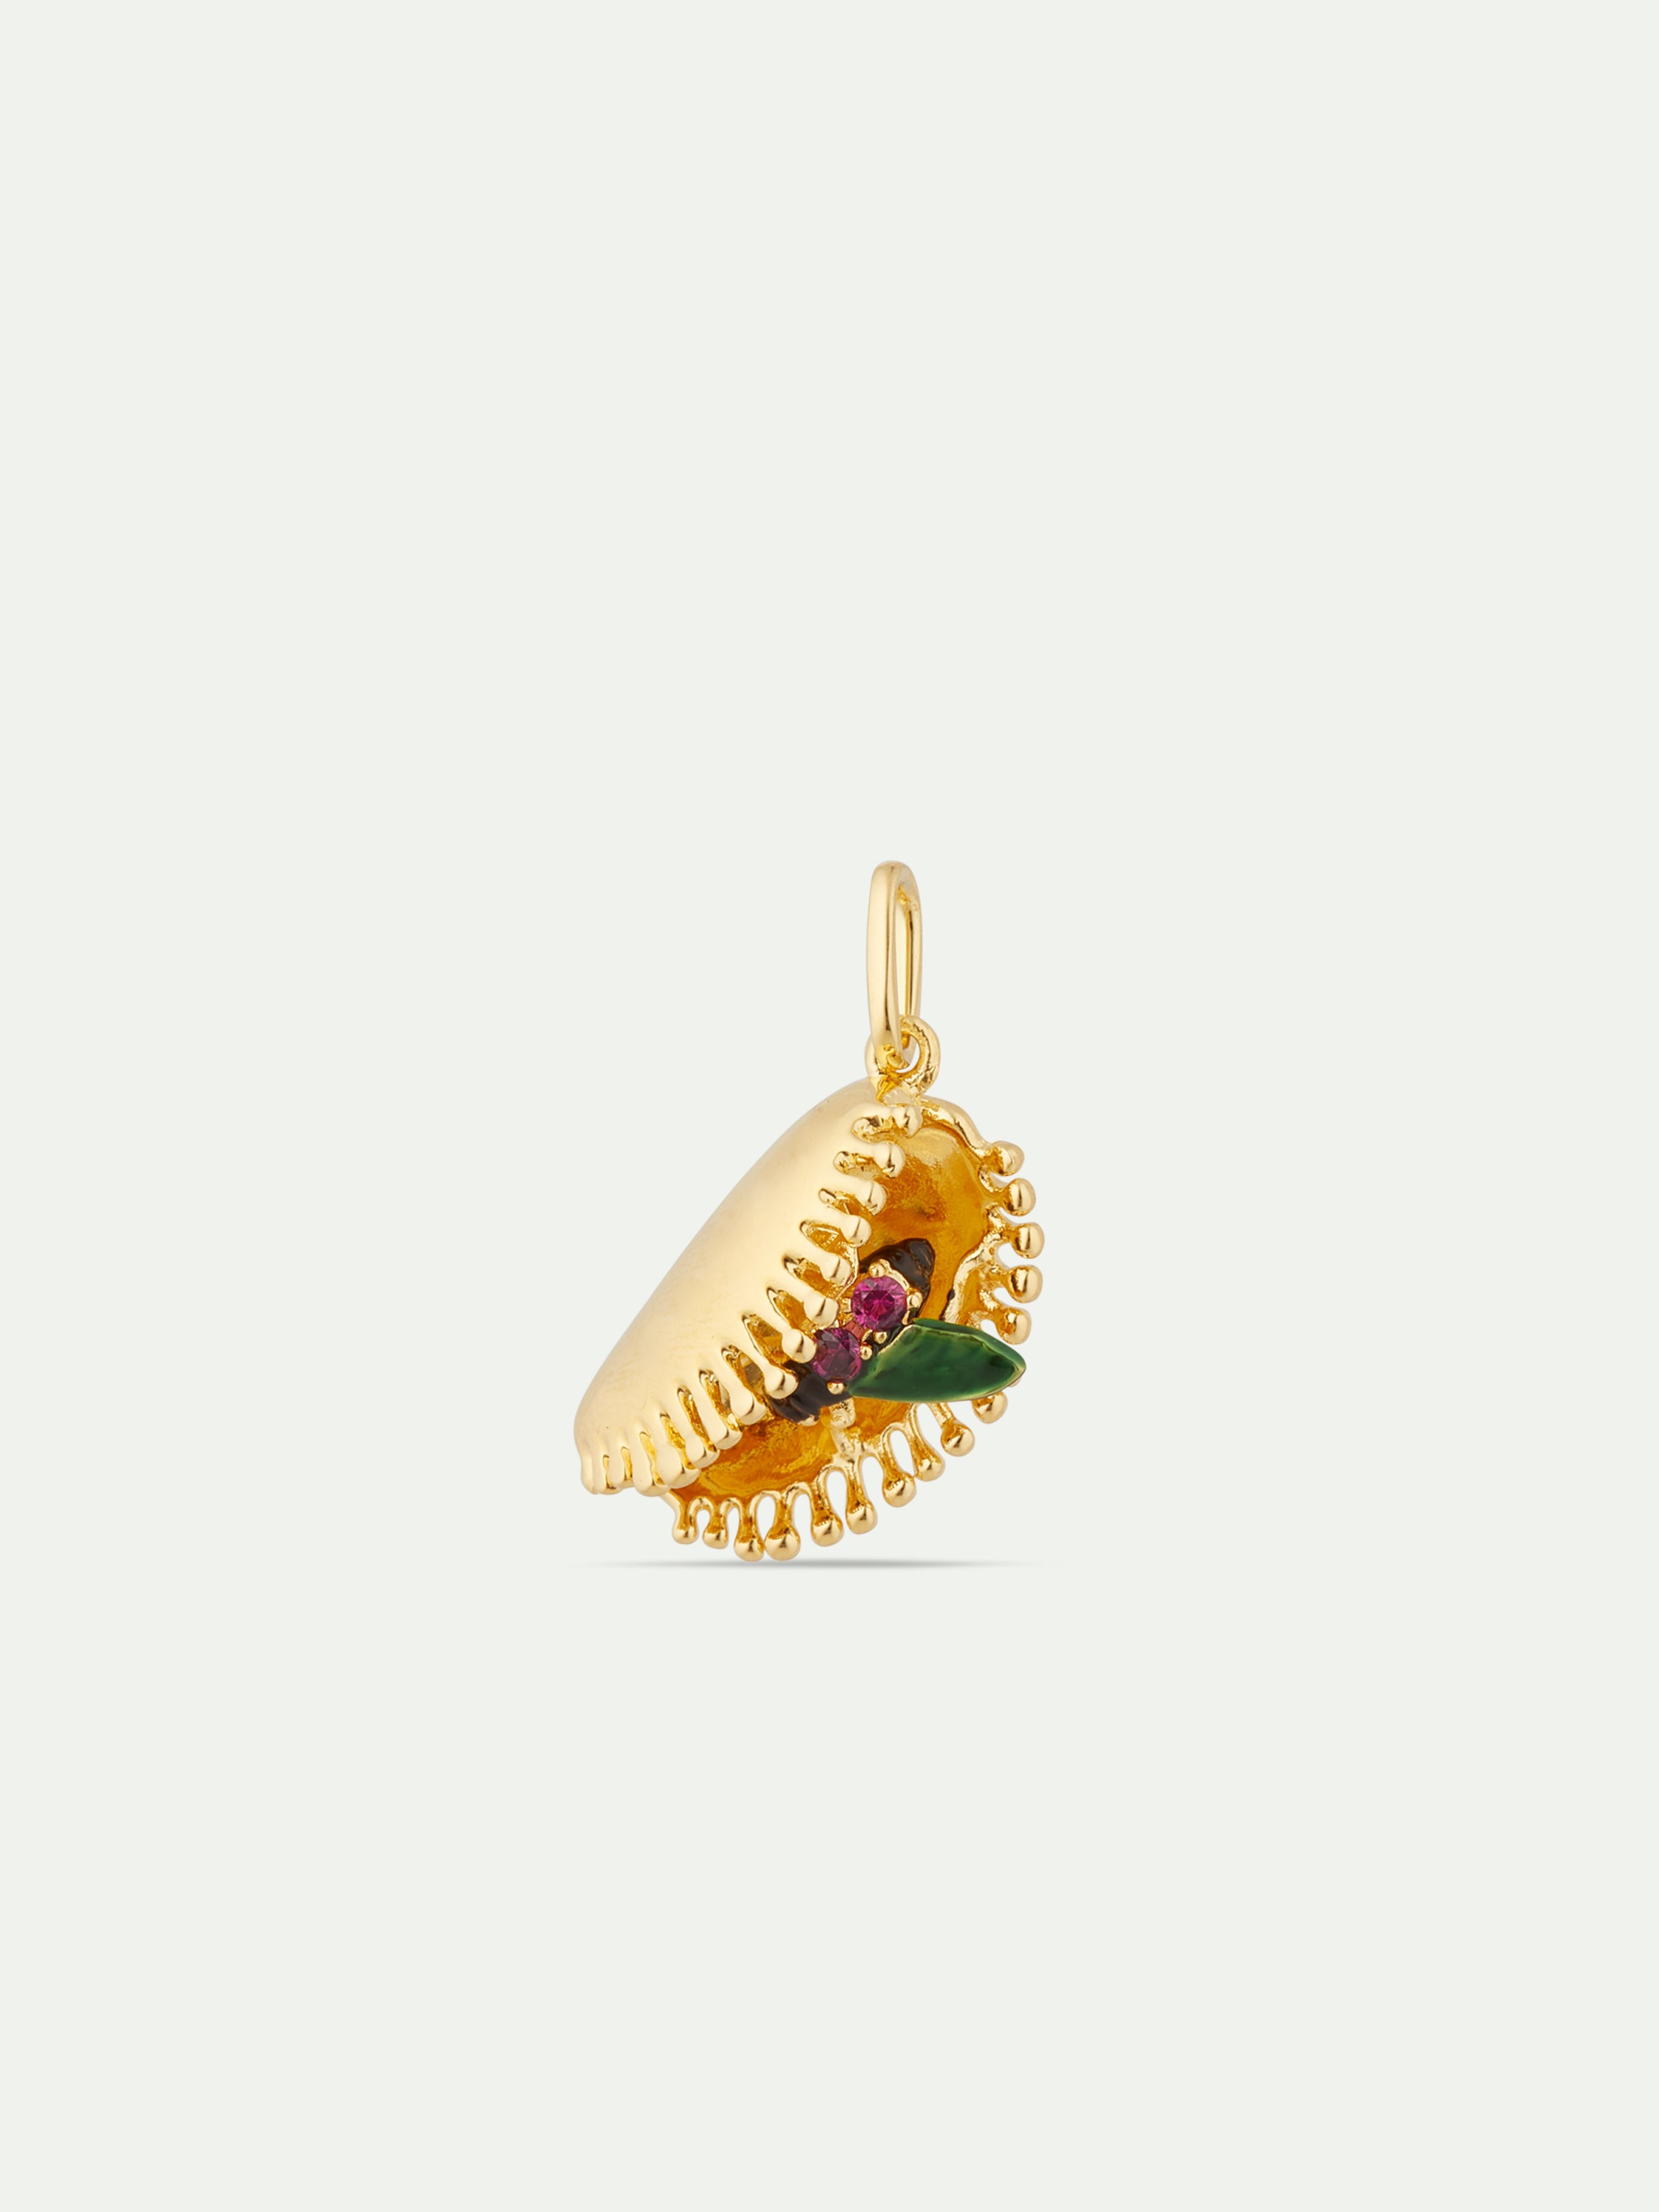 Carnivorous plant pendant